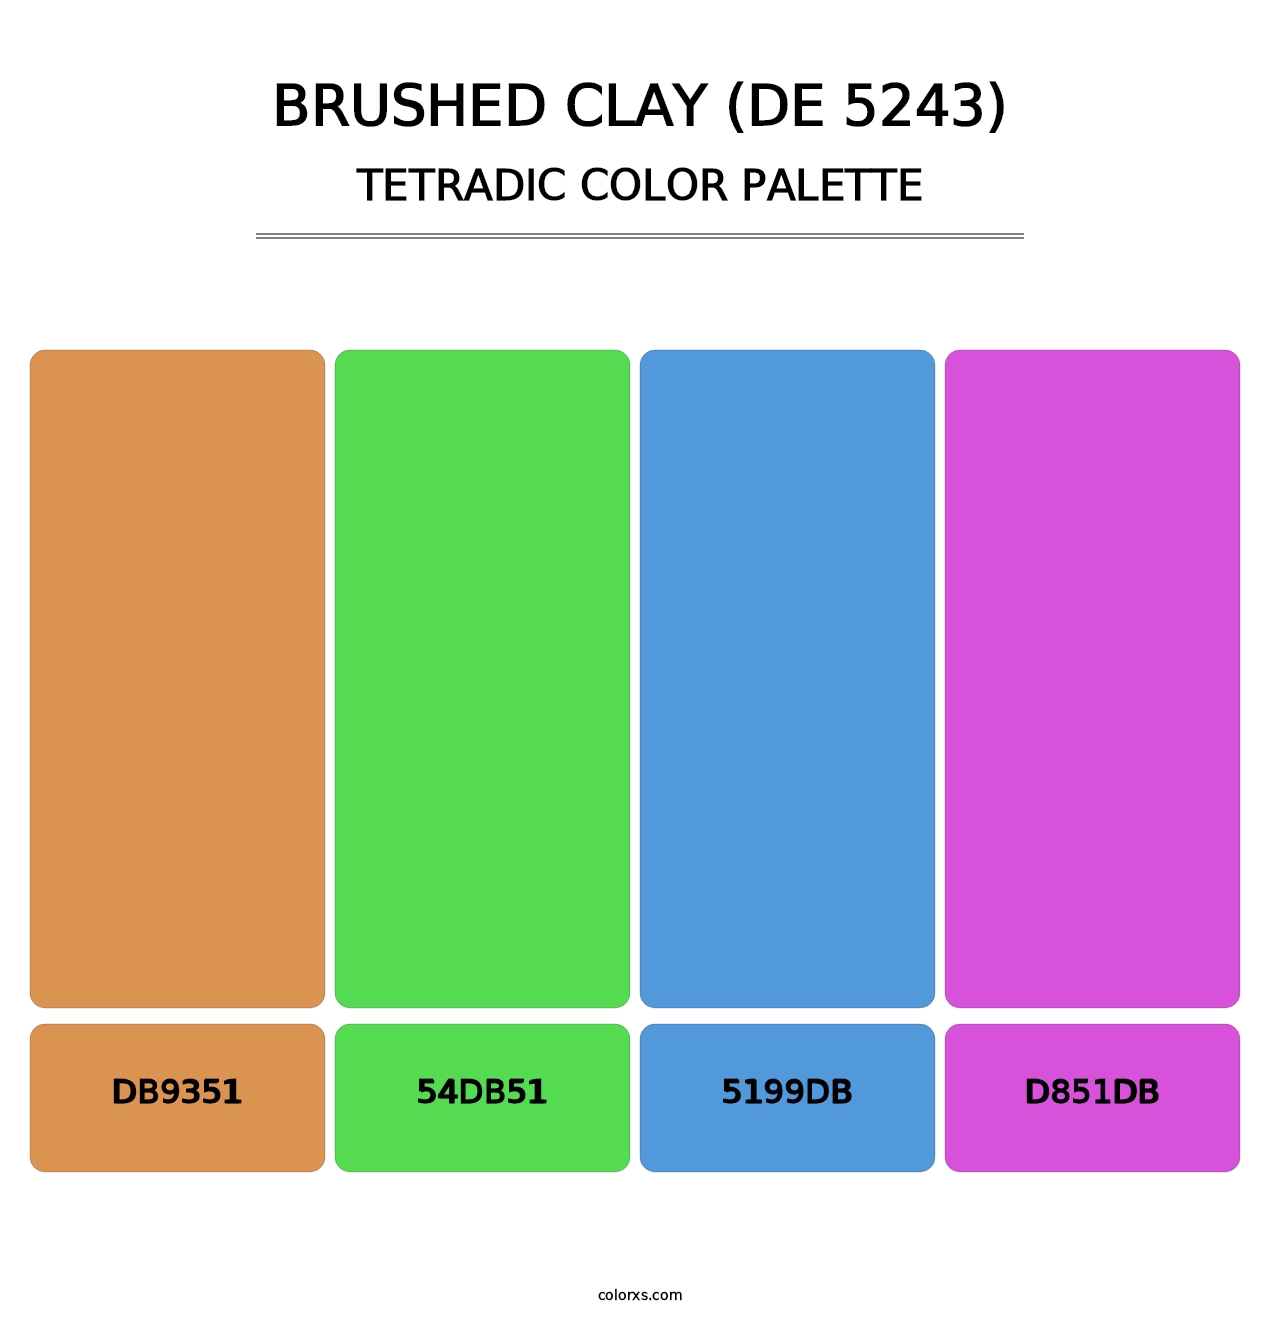 Brushed Clay (DE 5243) - Tetradic Color Palette